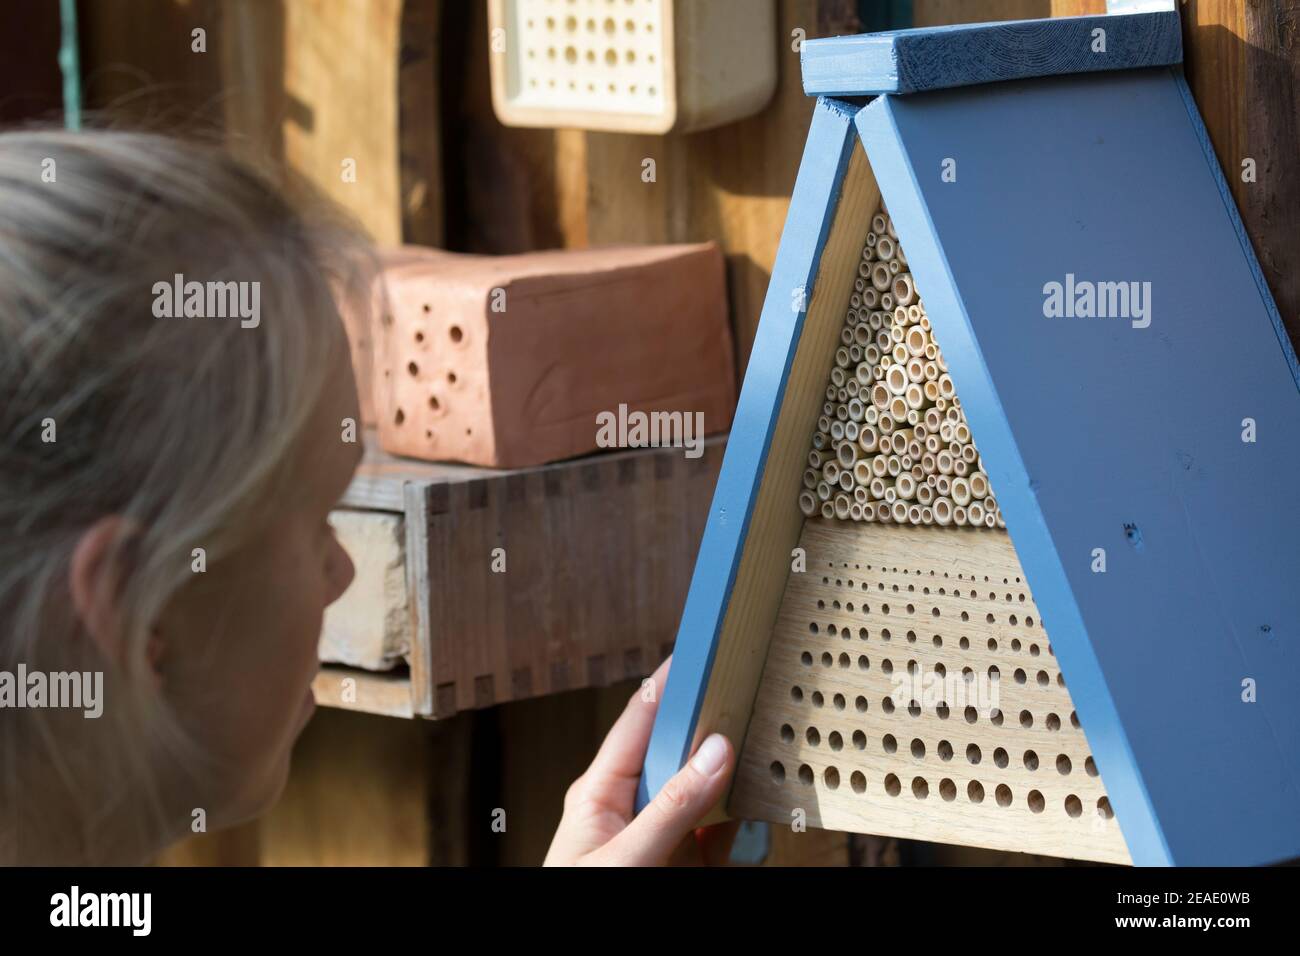 Beobachtung un Wildbienen-Nisthilfen, junge Frau beobachtet Wildbienen un Nisthilfen. Wildbienen-Nisthilfen, Wildbienen-Nisthilfe selbermachen, selber Foto de stock